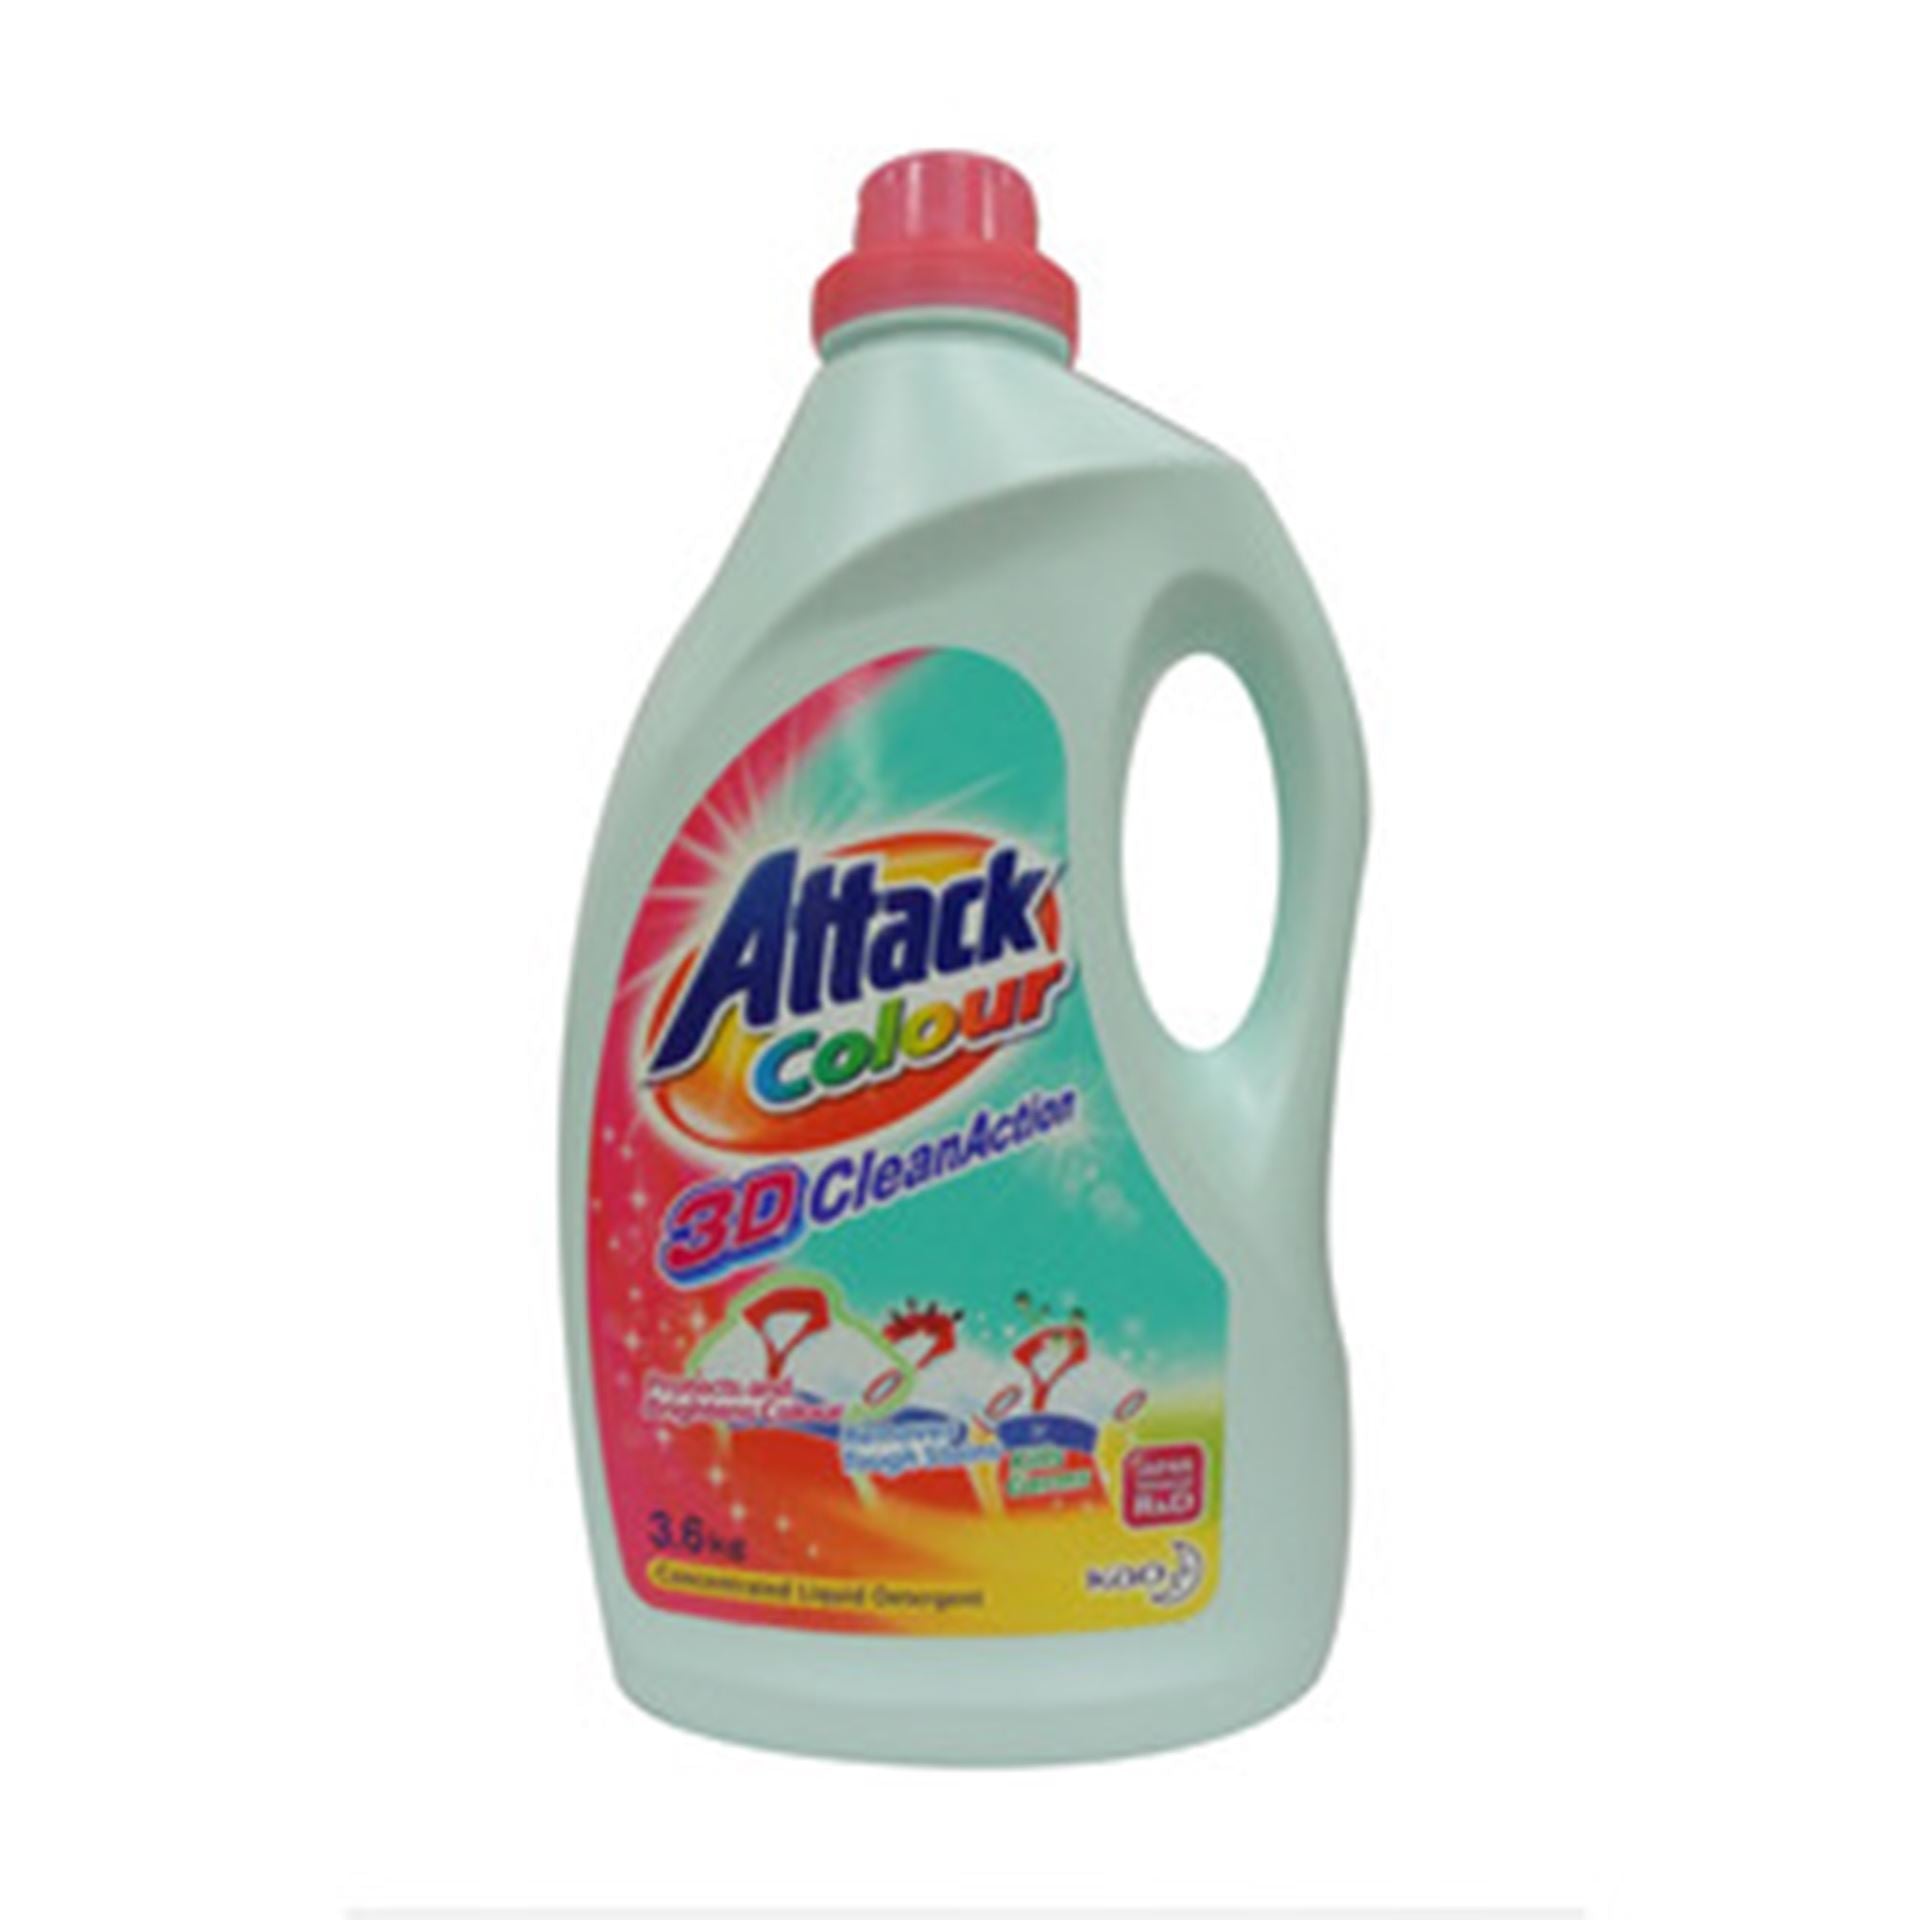 Attack Colour Concentrated Liquid Detergent